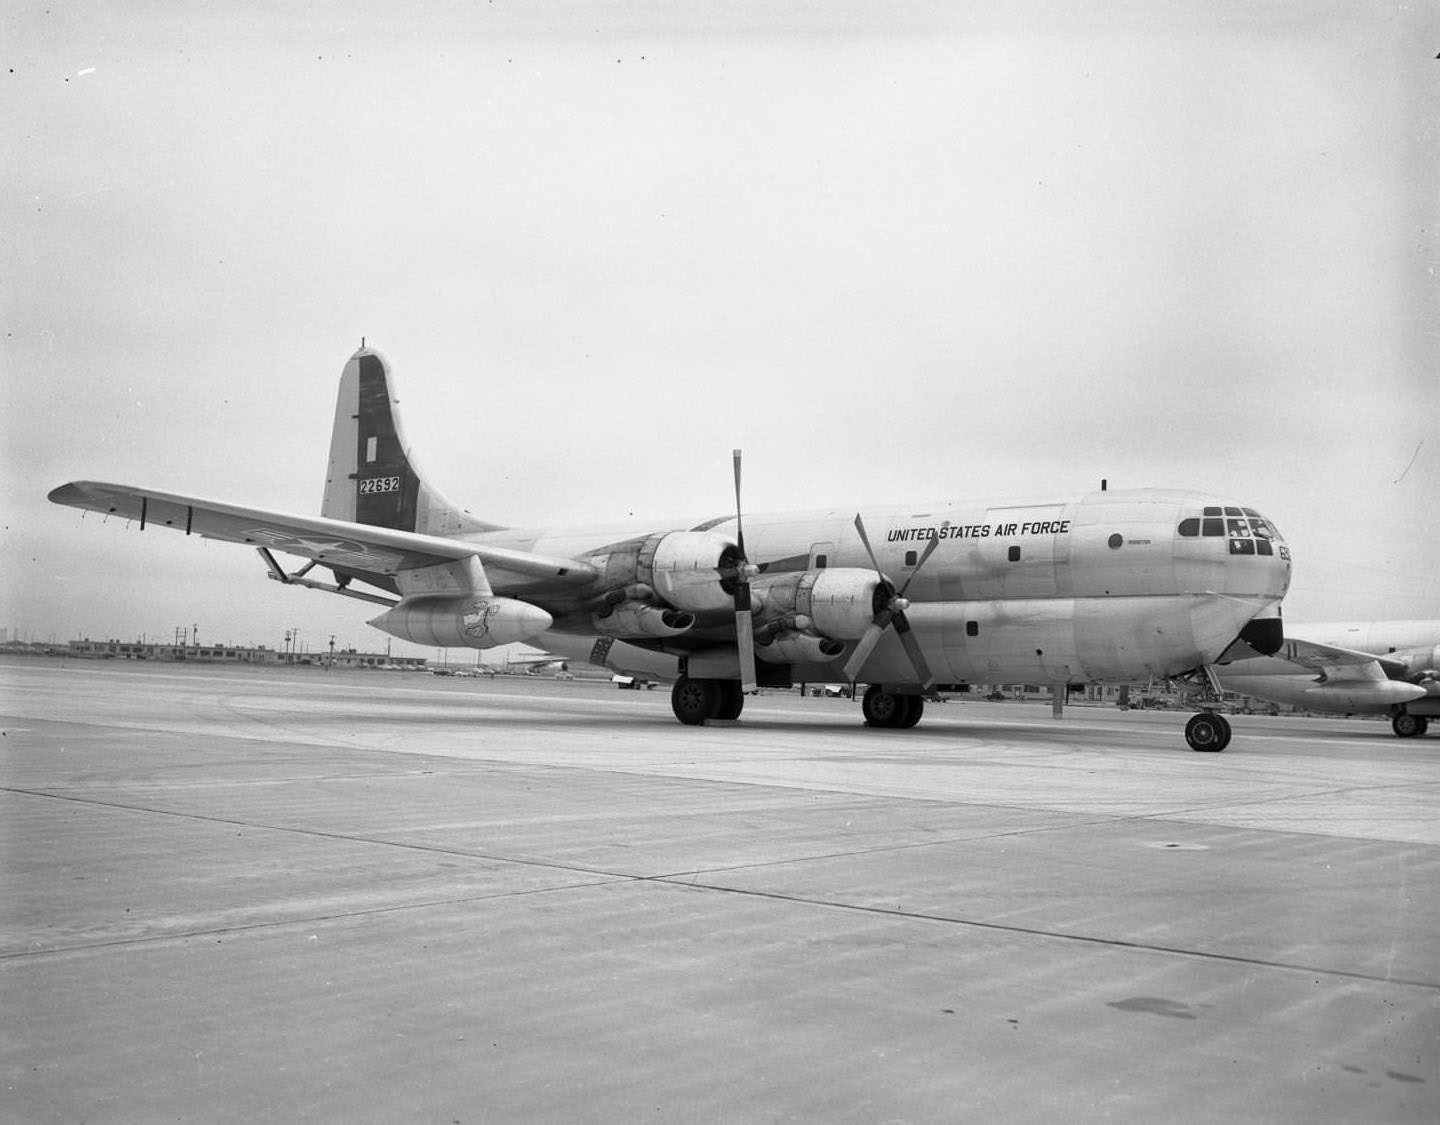 U. S. Air Force Cargo Plane, 1956